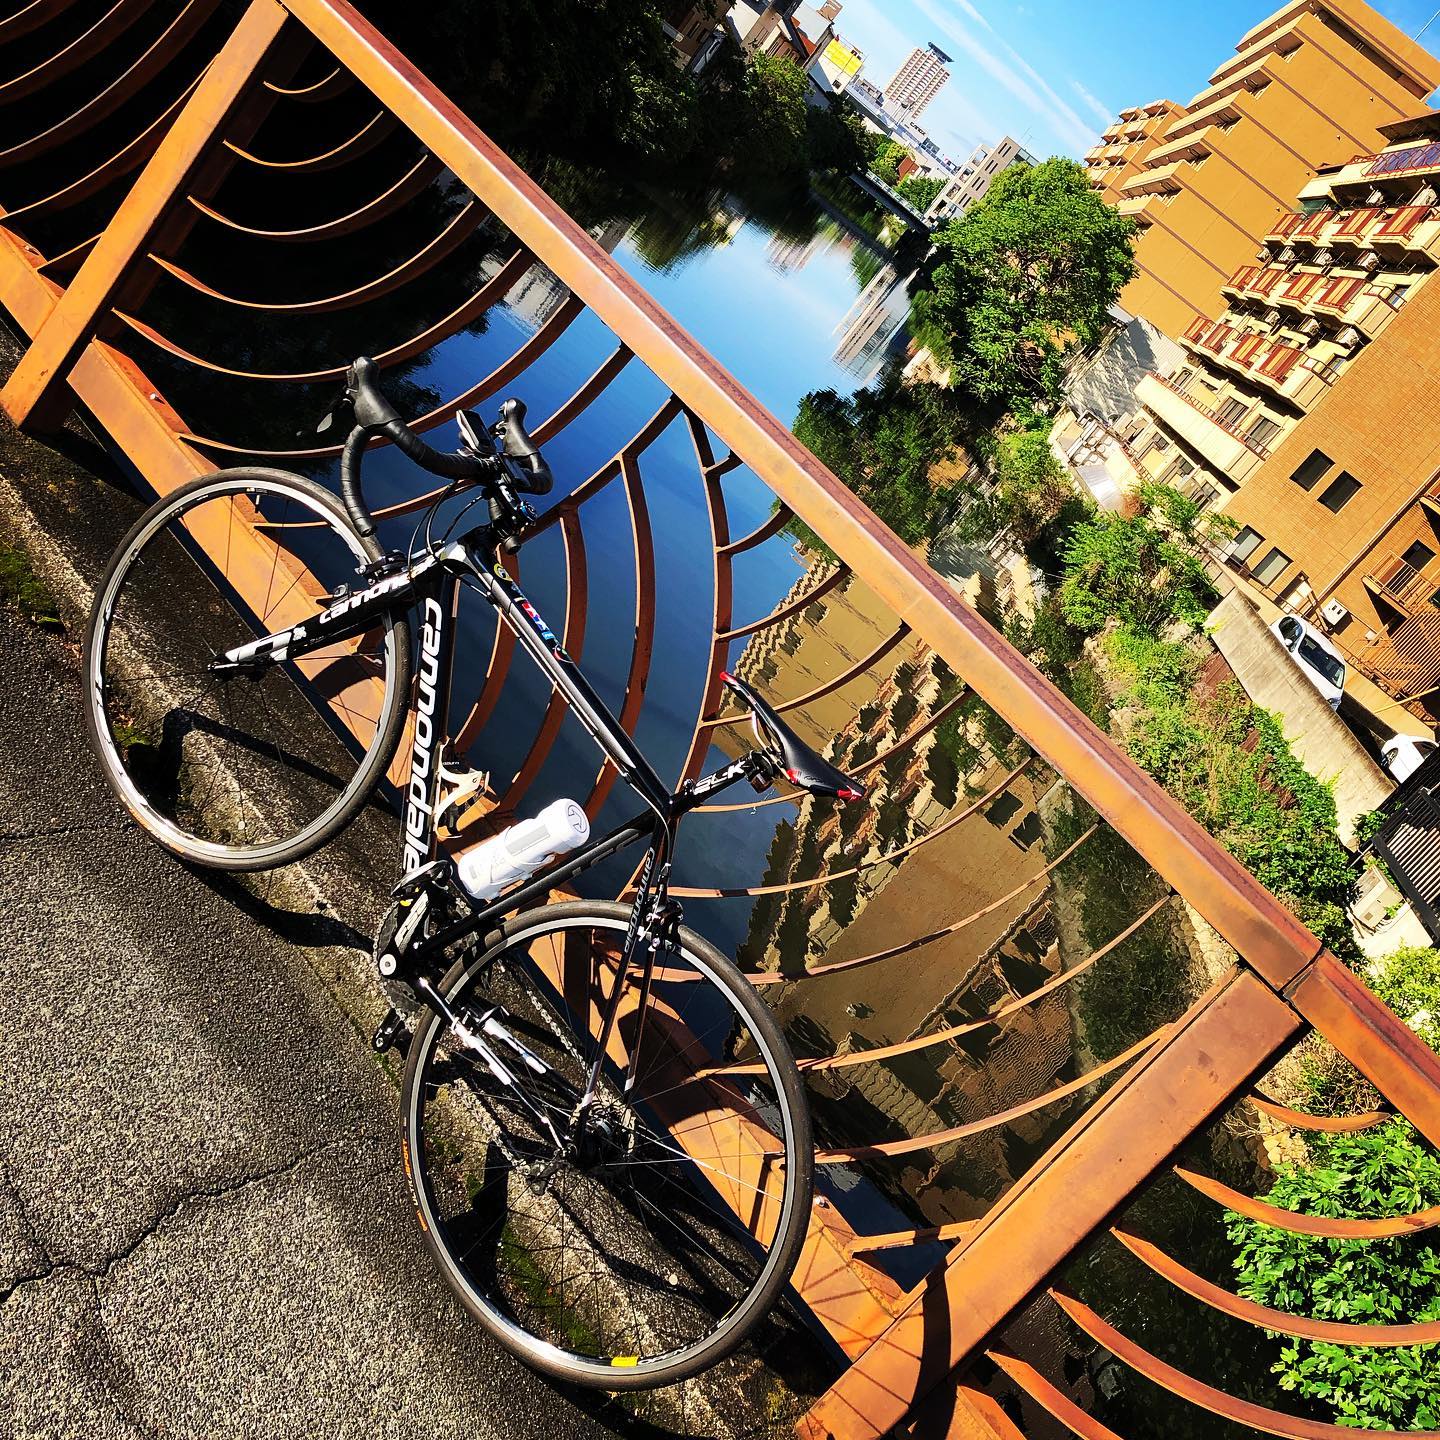 Cannondale SuperSix EvoNagoya City / Japan#japan #aichi #nagoya #instagood #instacycle #roadie #roadcycle #roadbike  #love #iphone6s #bicycle #cycling #bike #roadbike #cannondale #supersixevo #powertap #fsa #prologo #garmin #craft #ritchey